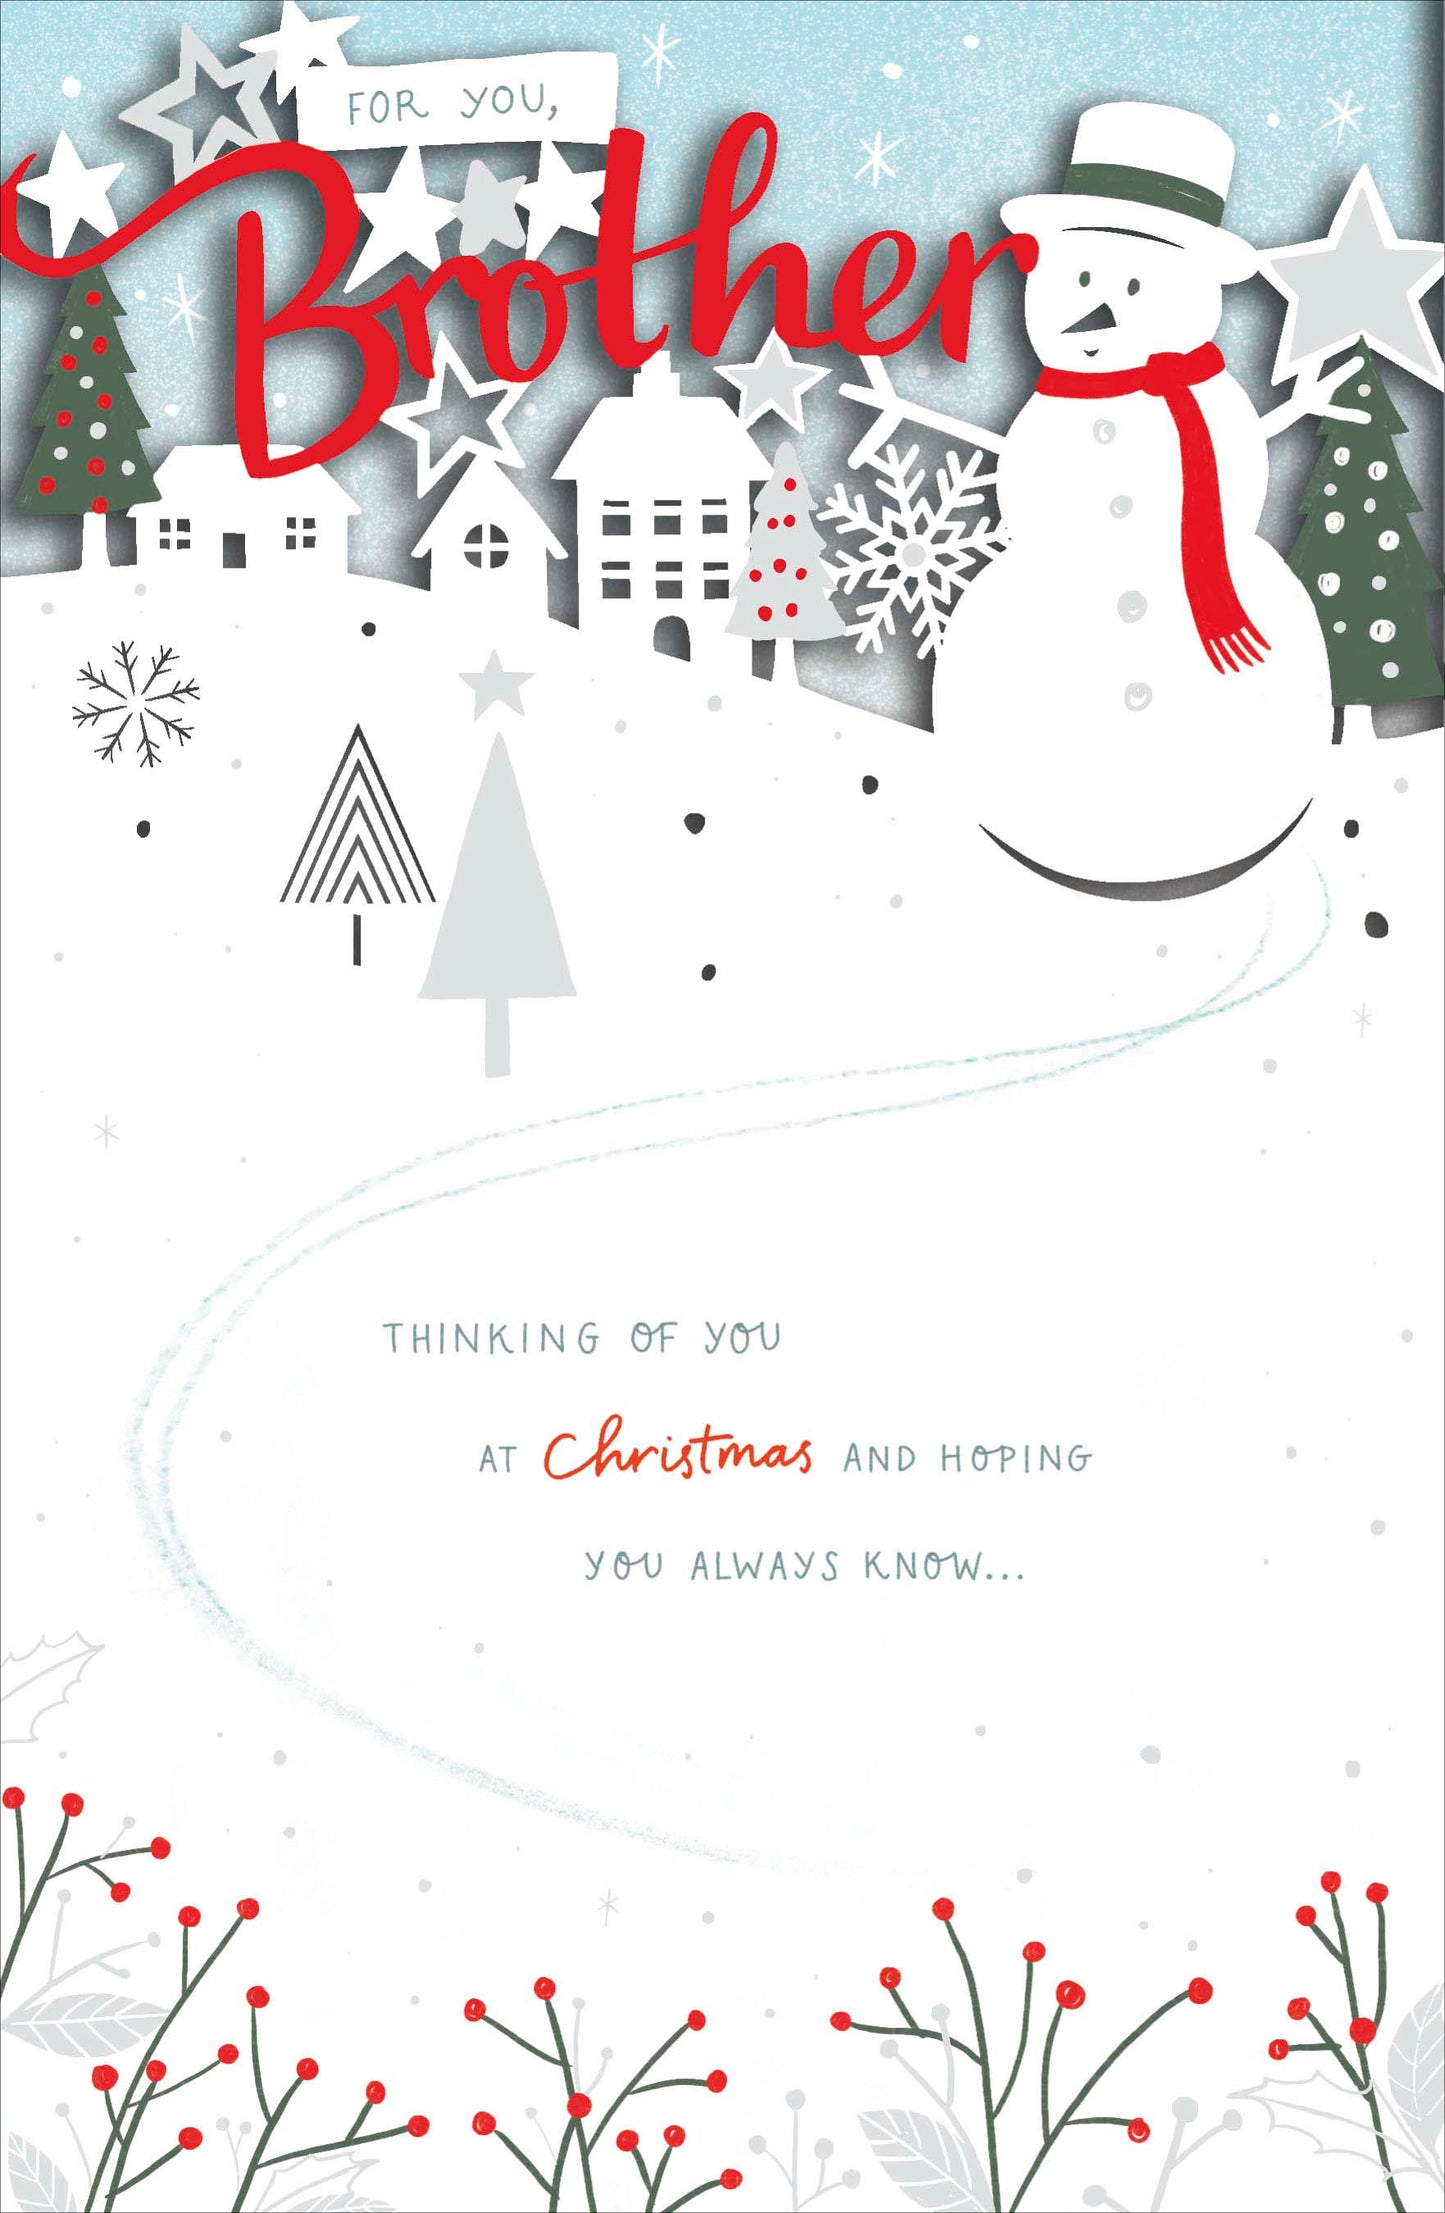 For You Nice Brother Traditional Christmas Greeting Card